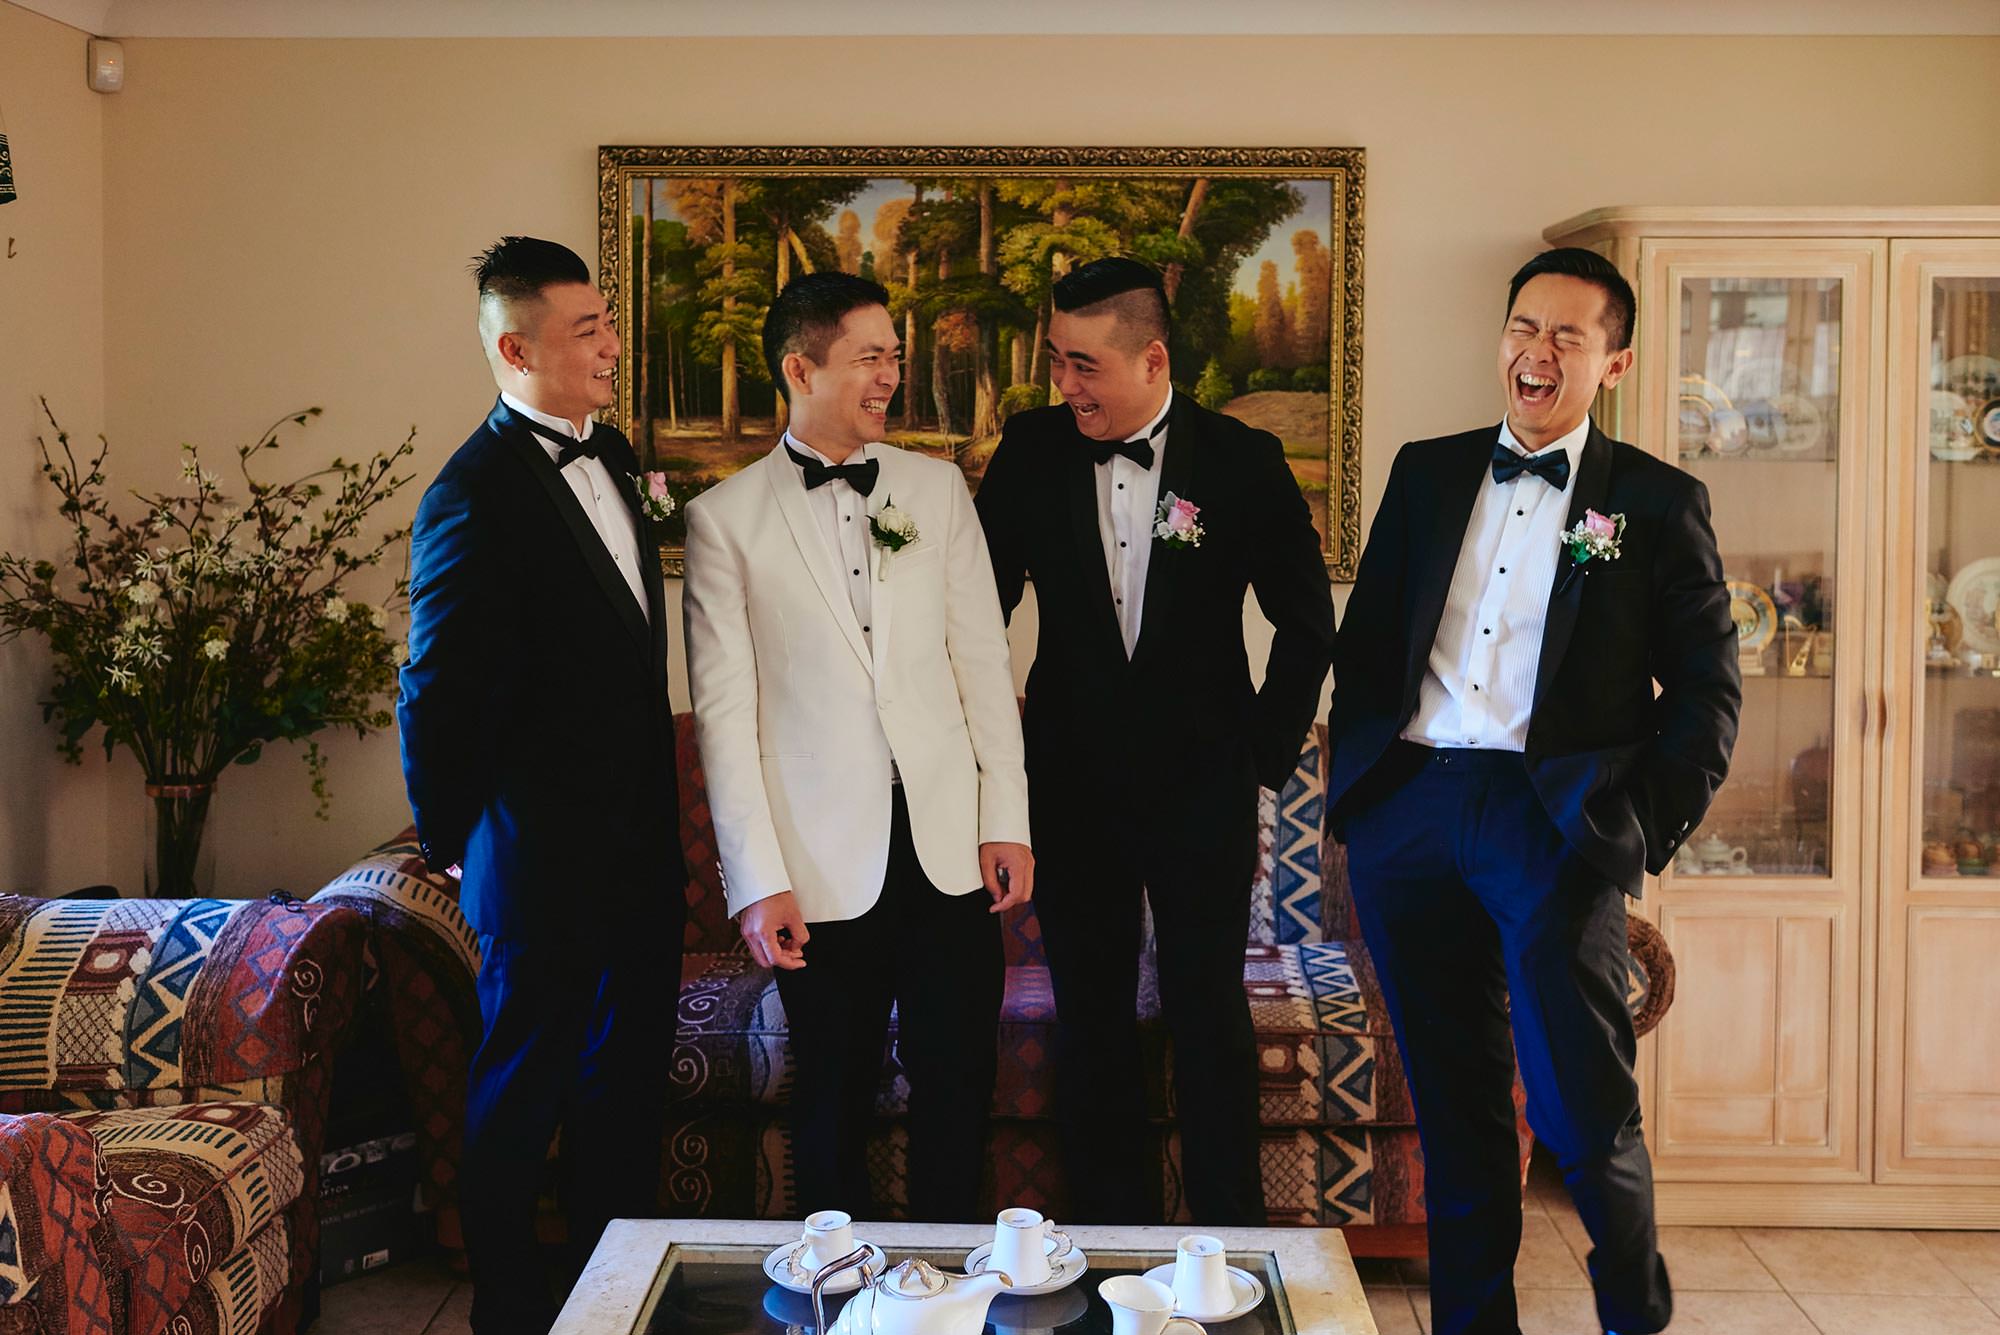 Bridegroom and groomsmen at Oatlands House